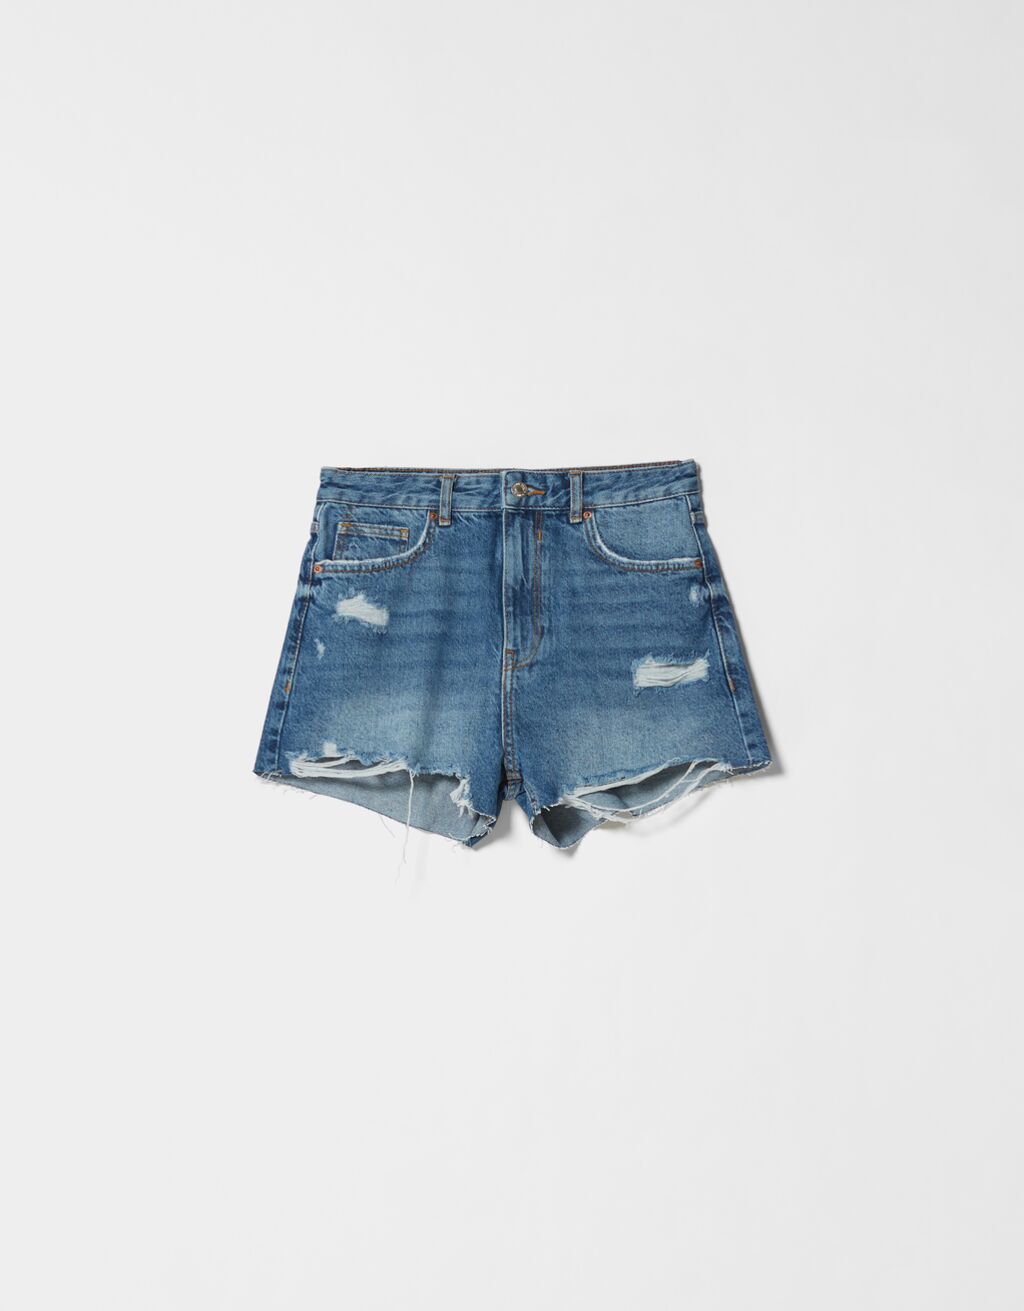 Vintage fade ripped denim shorts